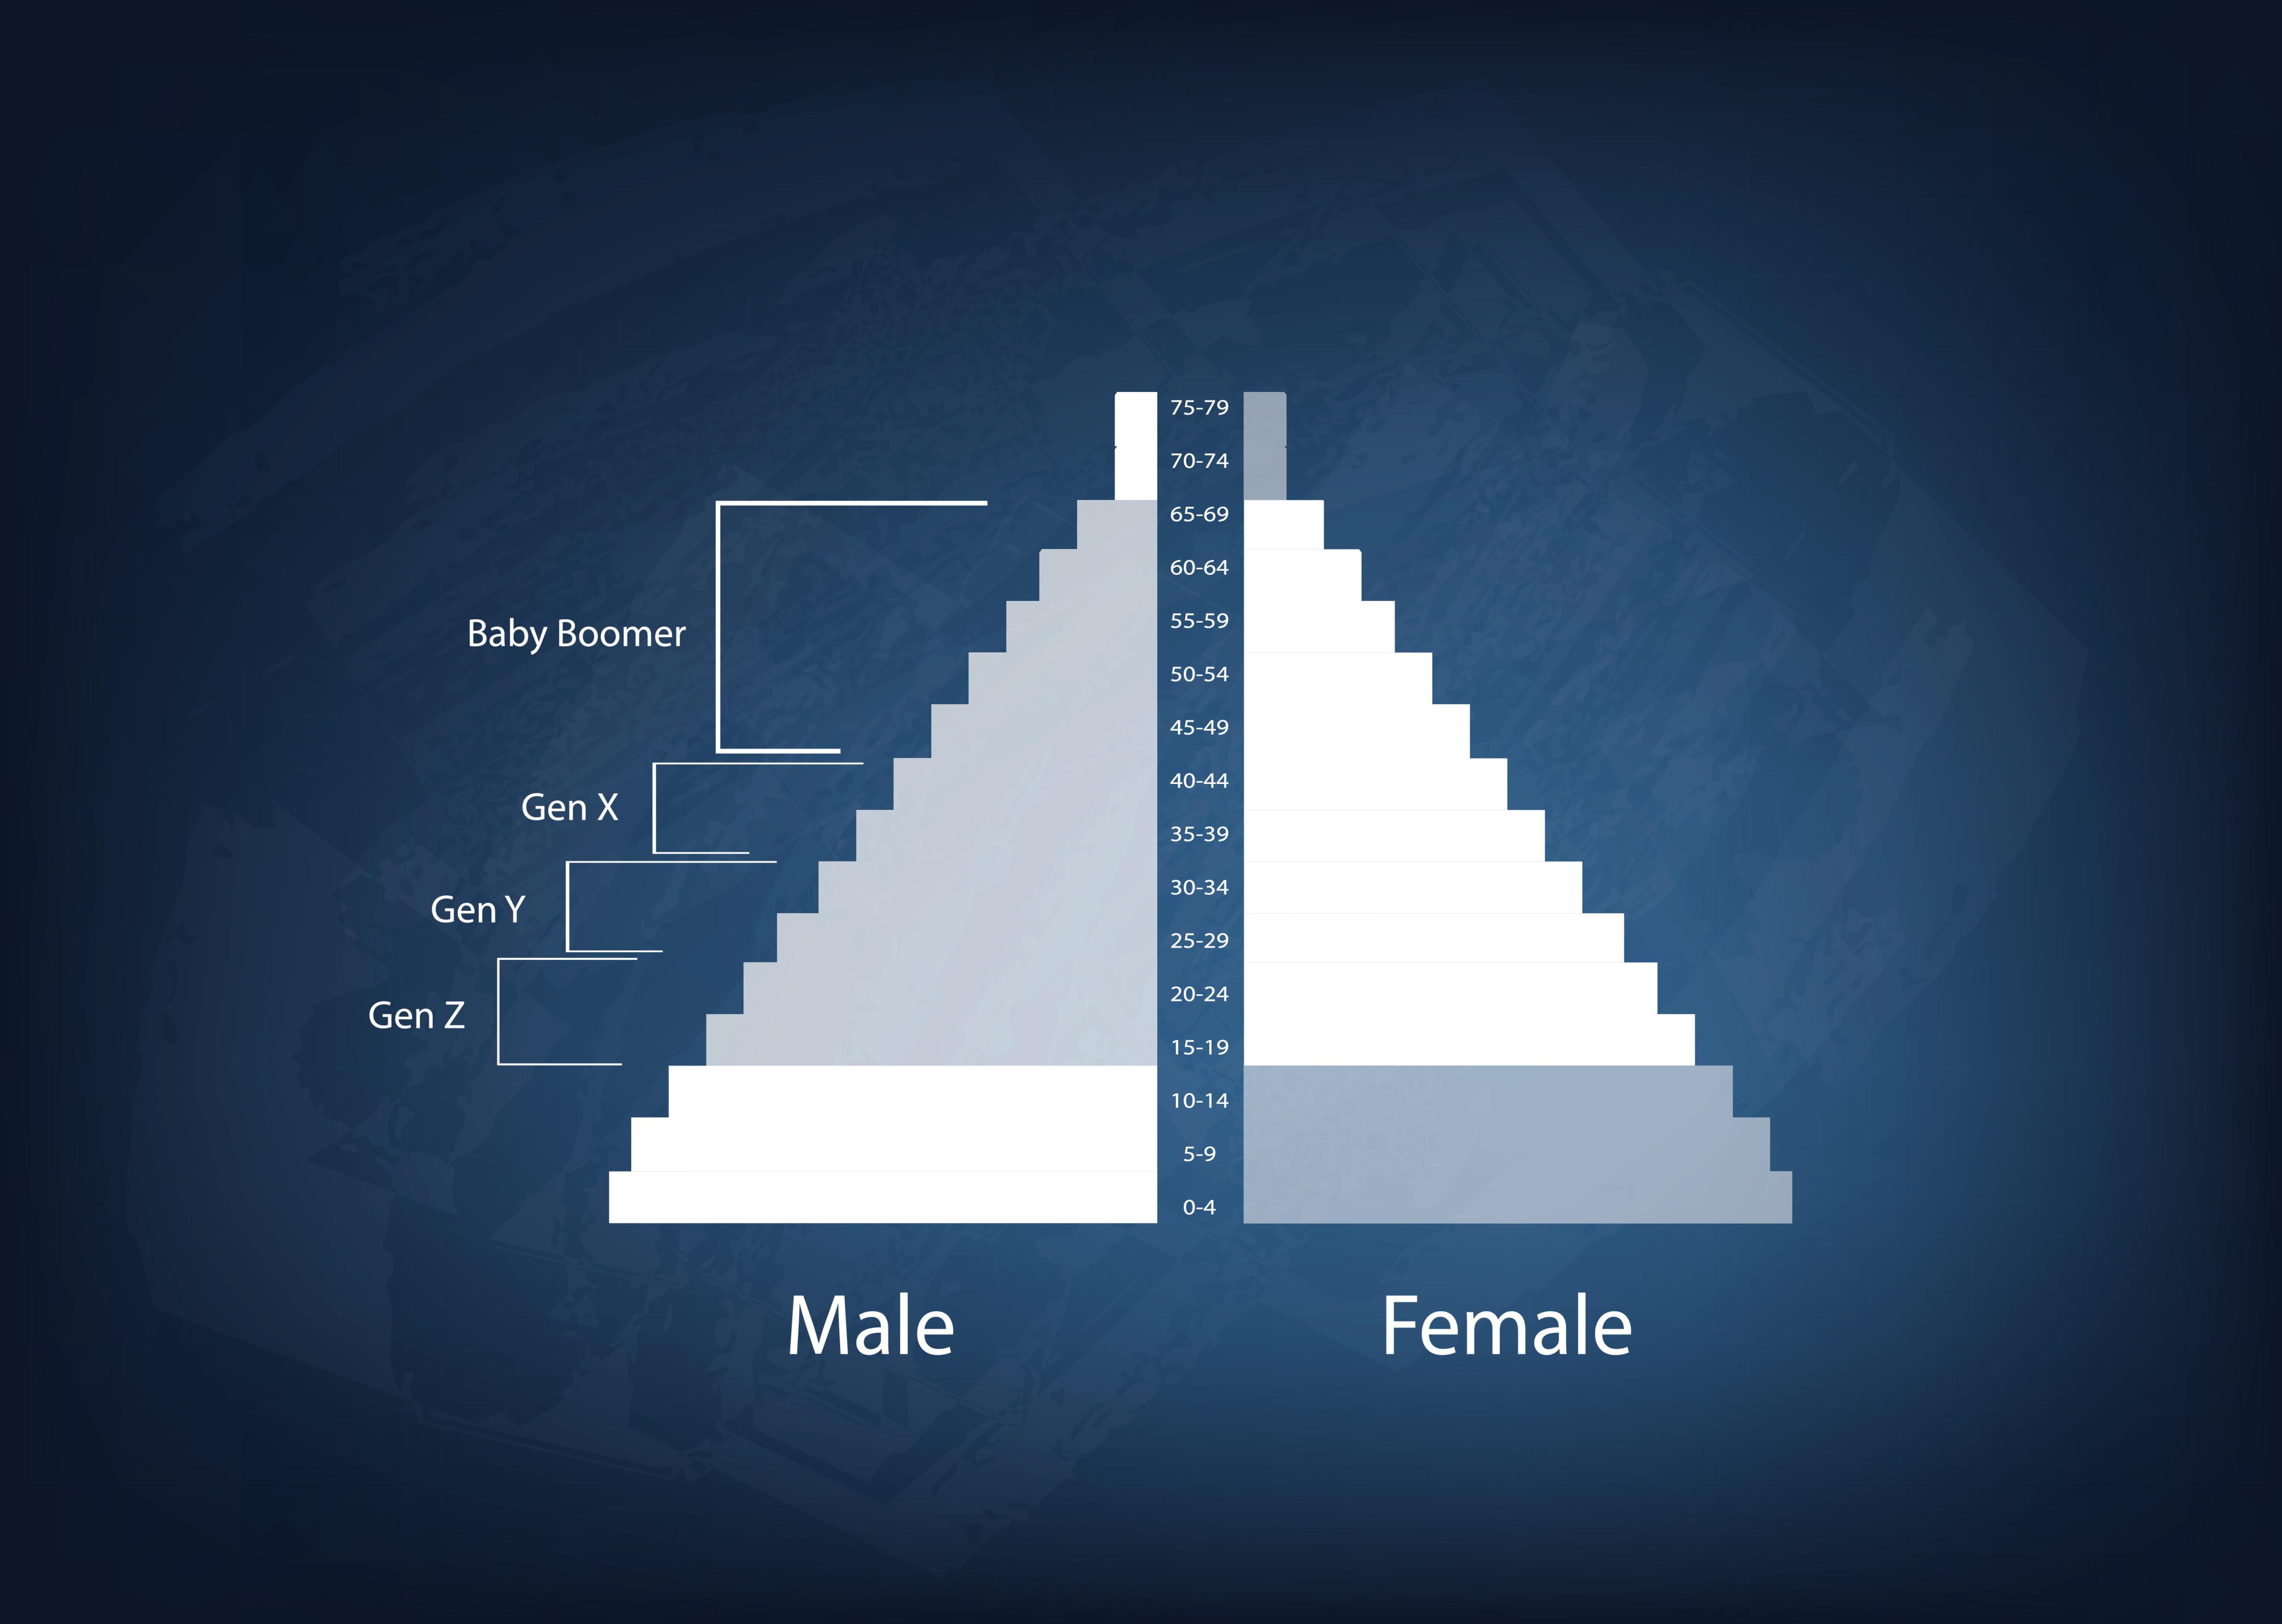 demographic transition and population pyramids